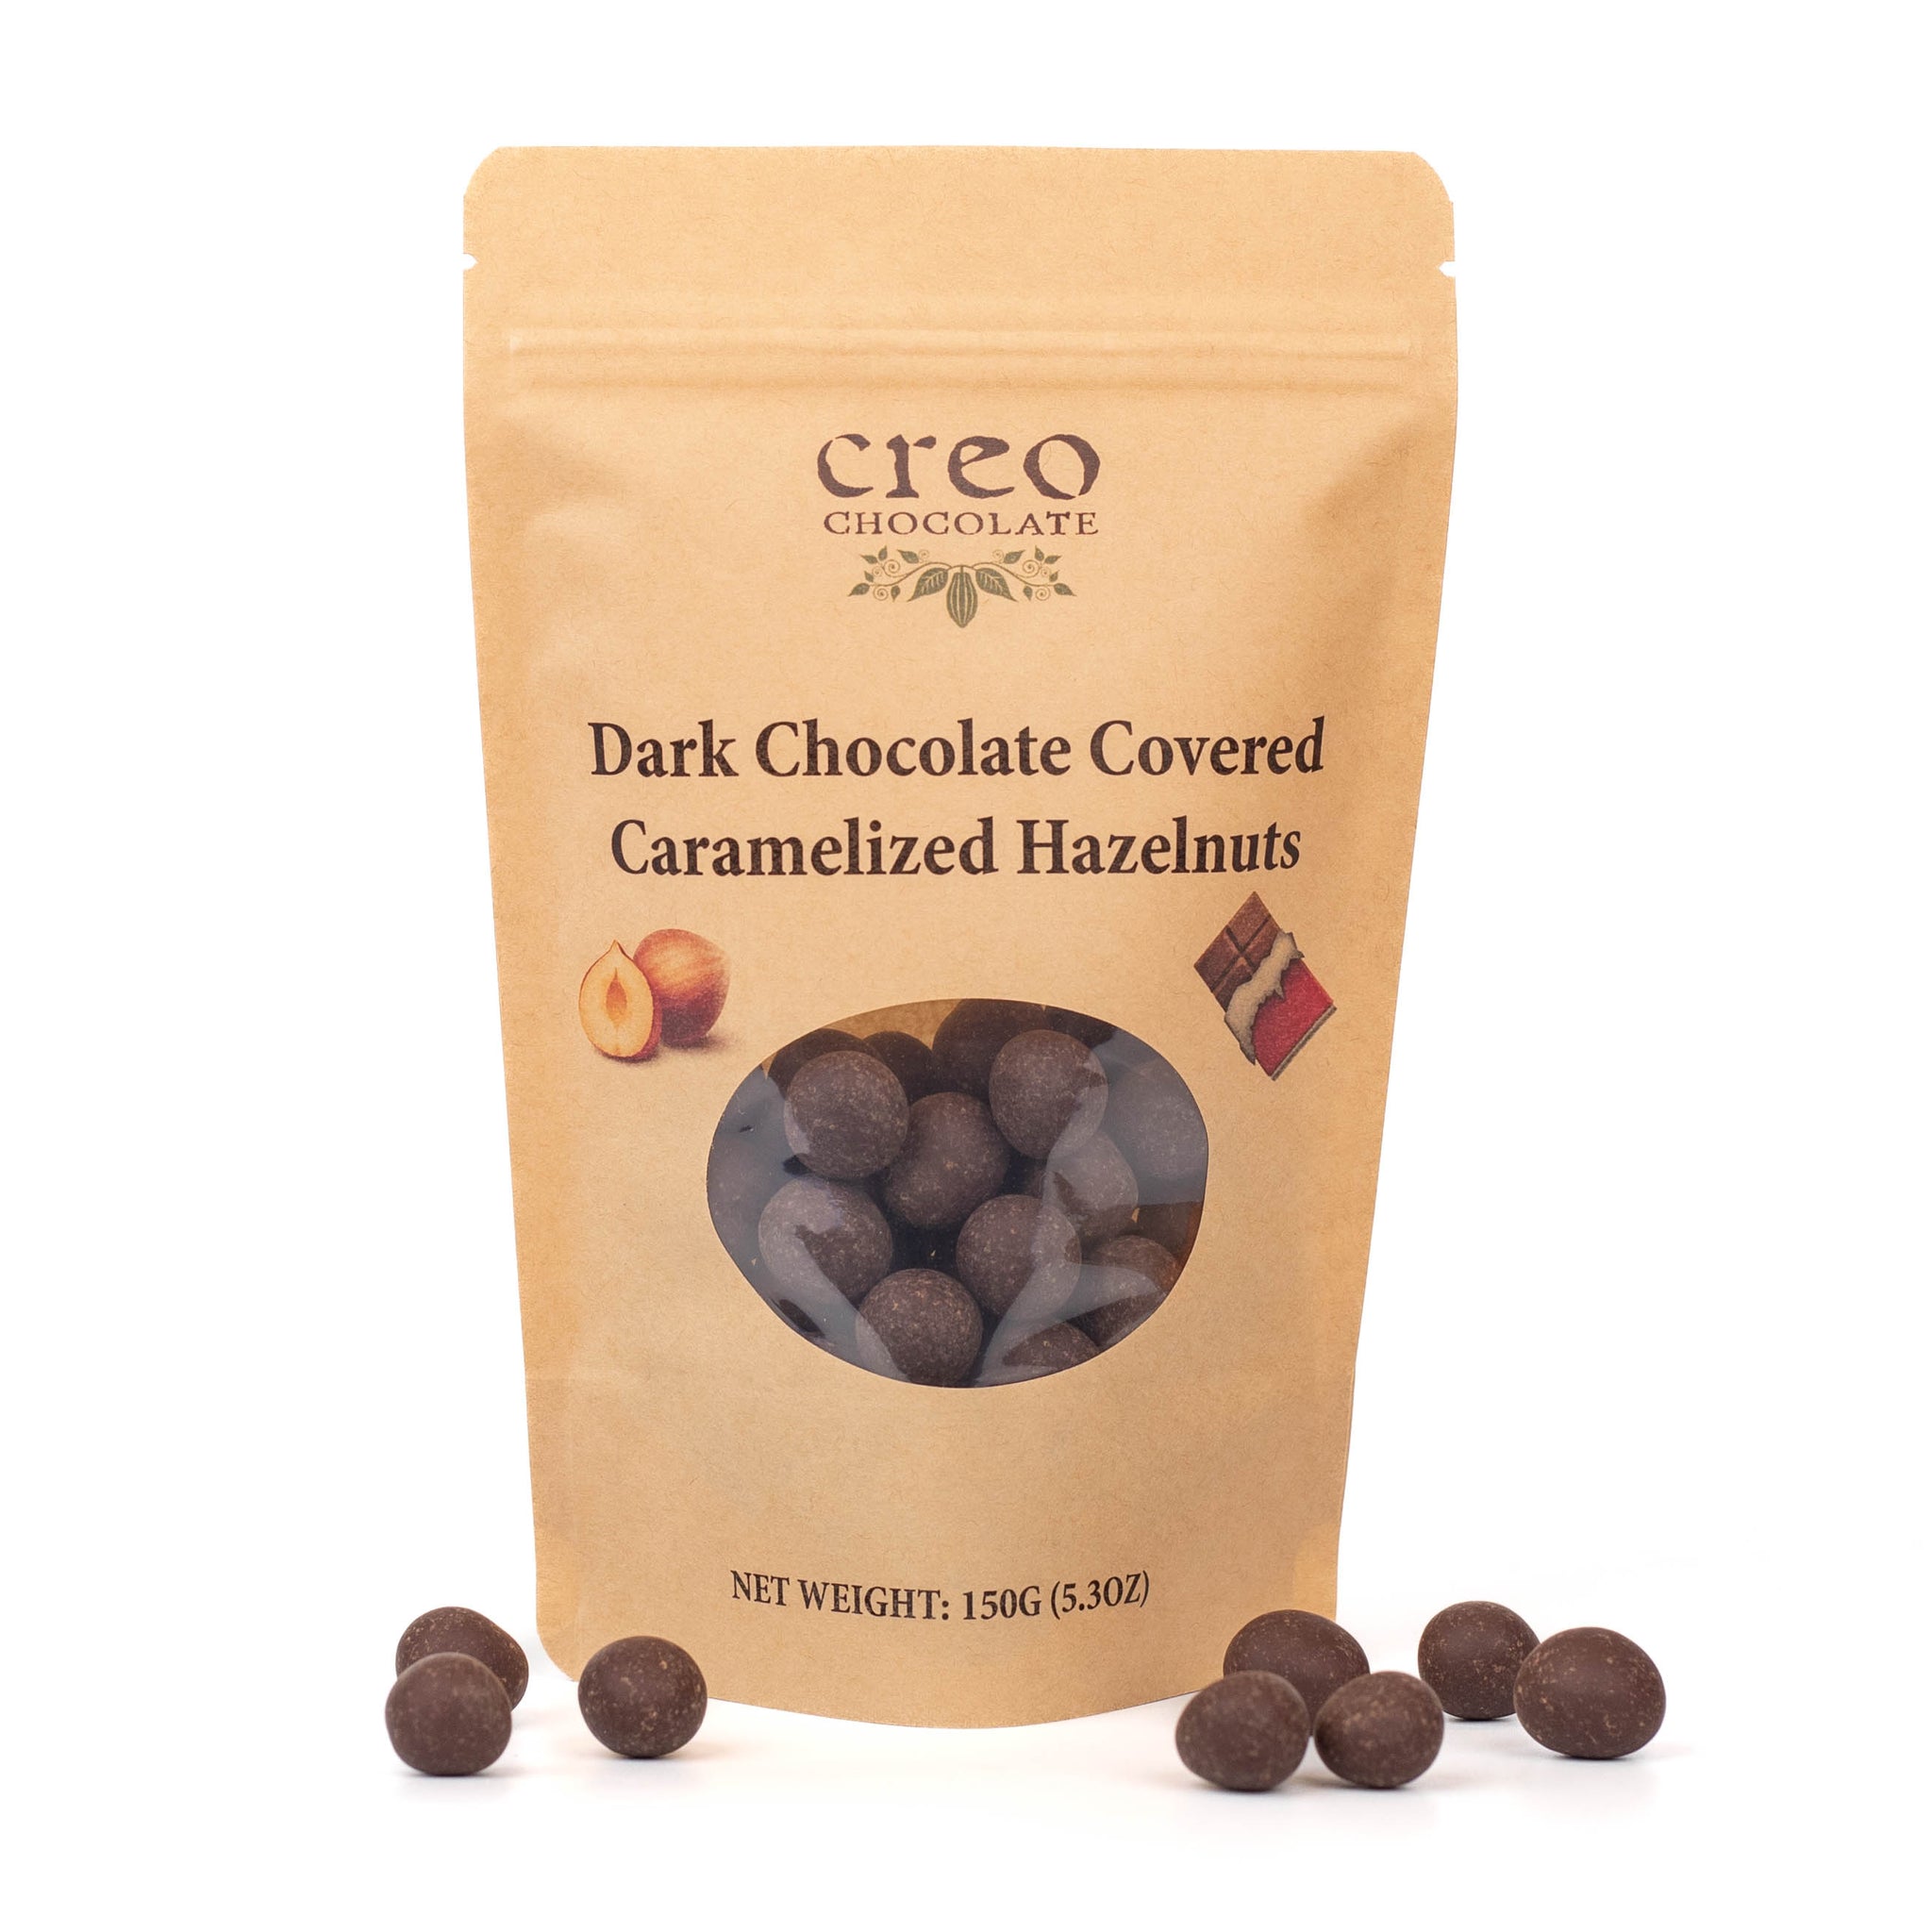 Dark Chocolate Covered Caramelized Hazelnuts